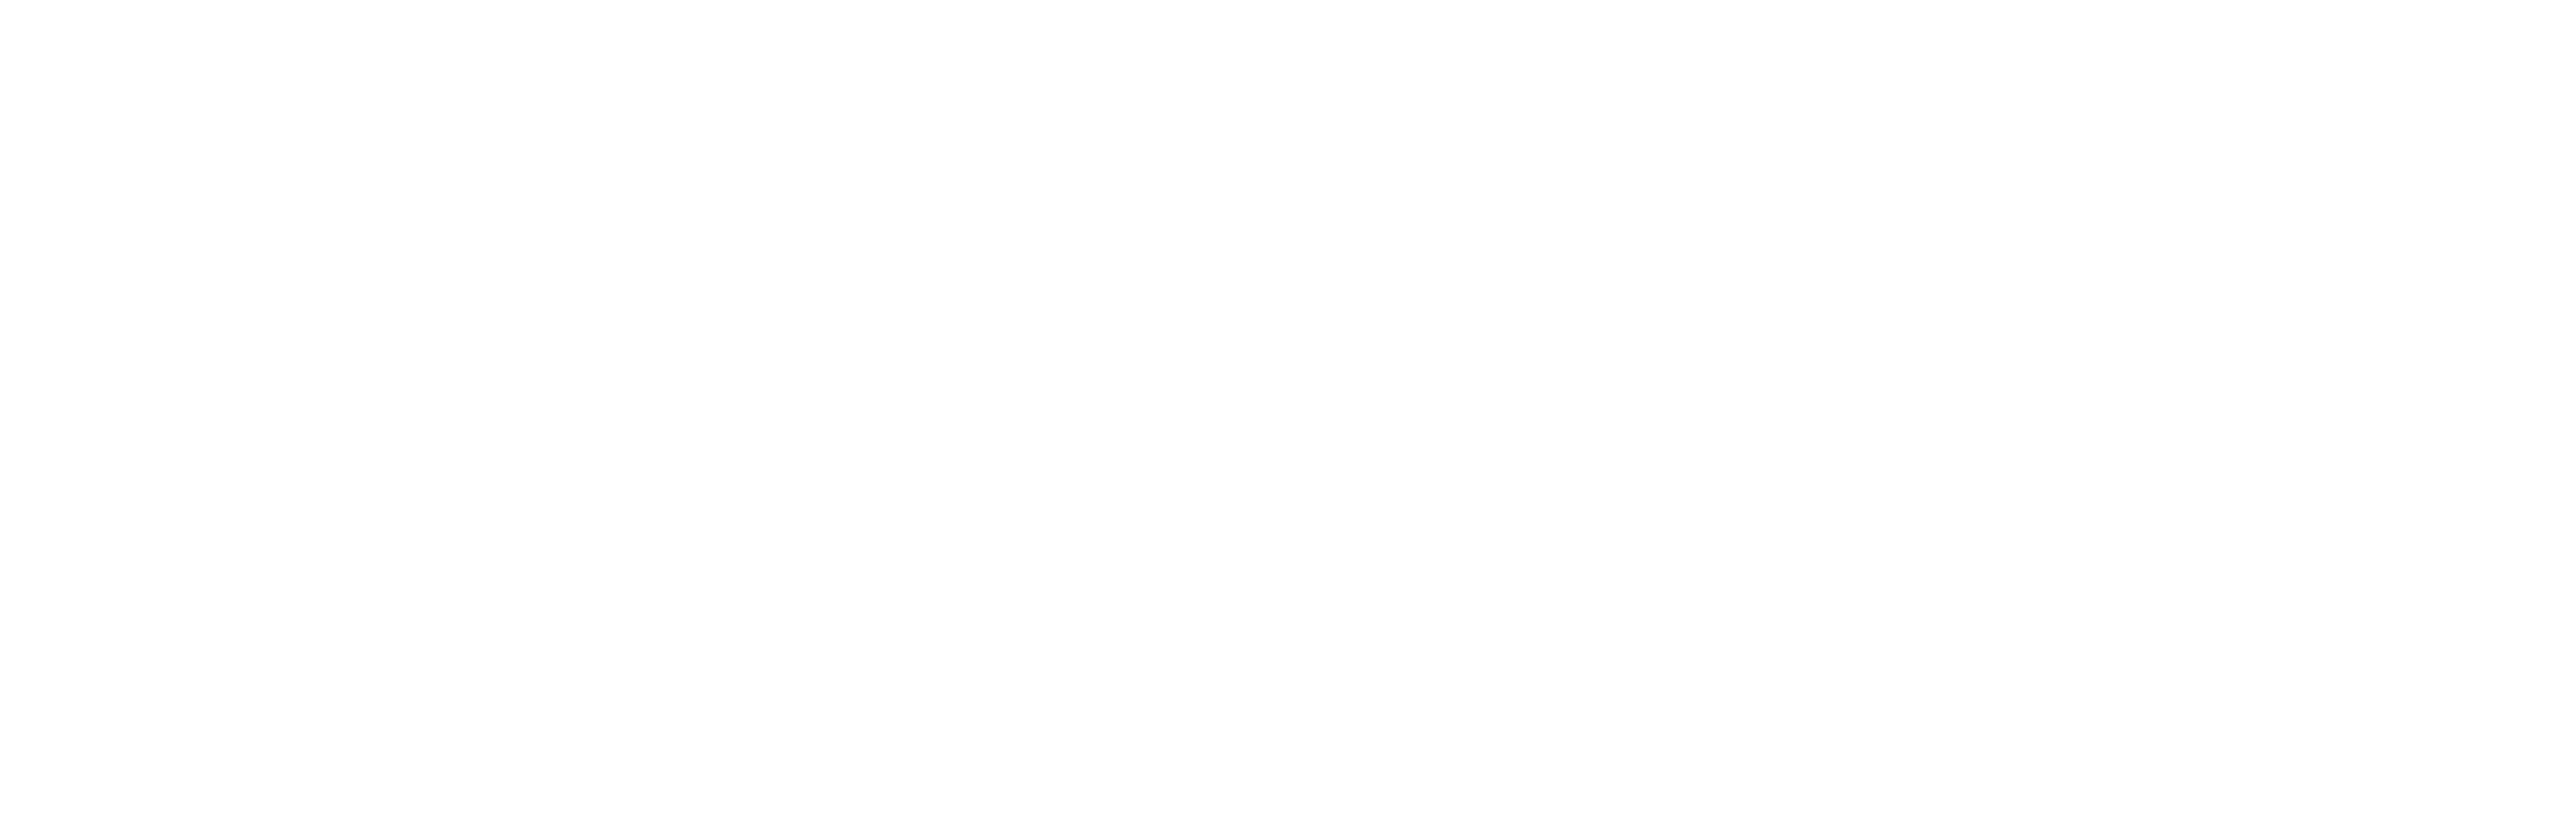 networx by iris white footer logo